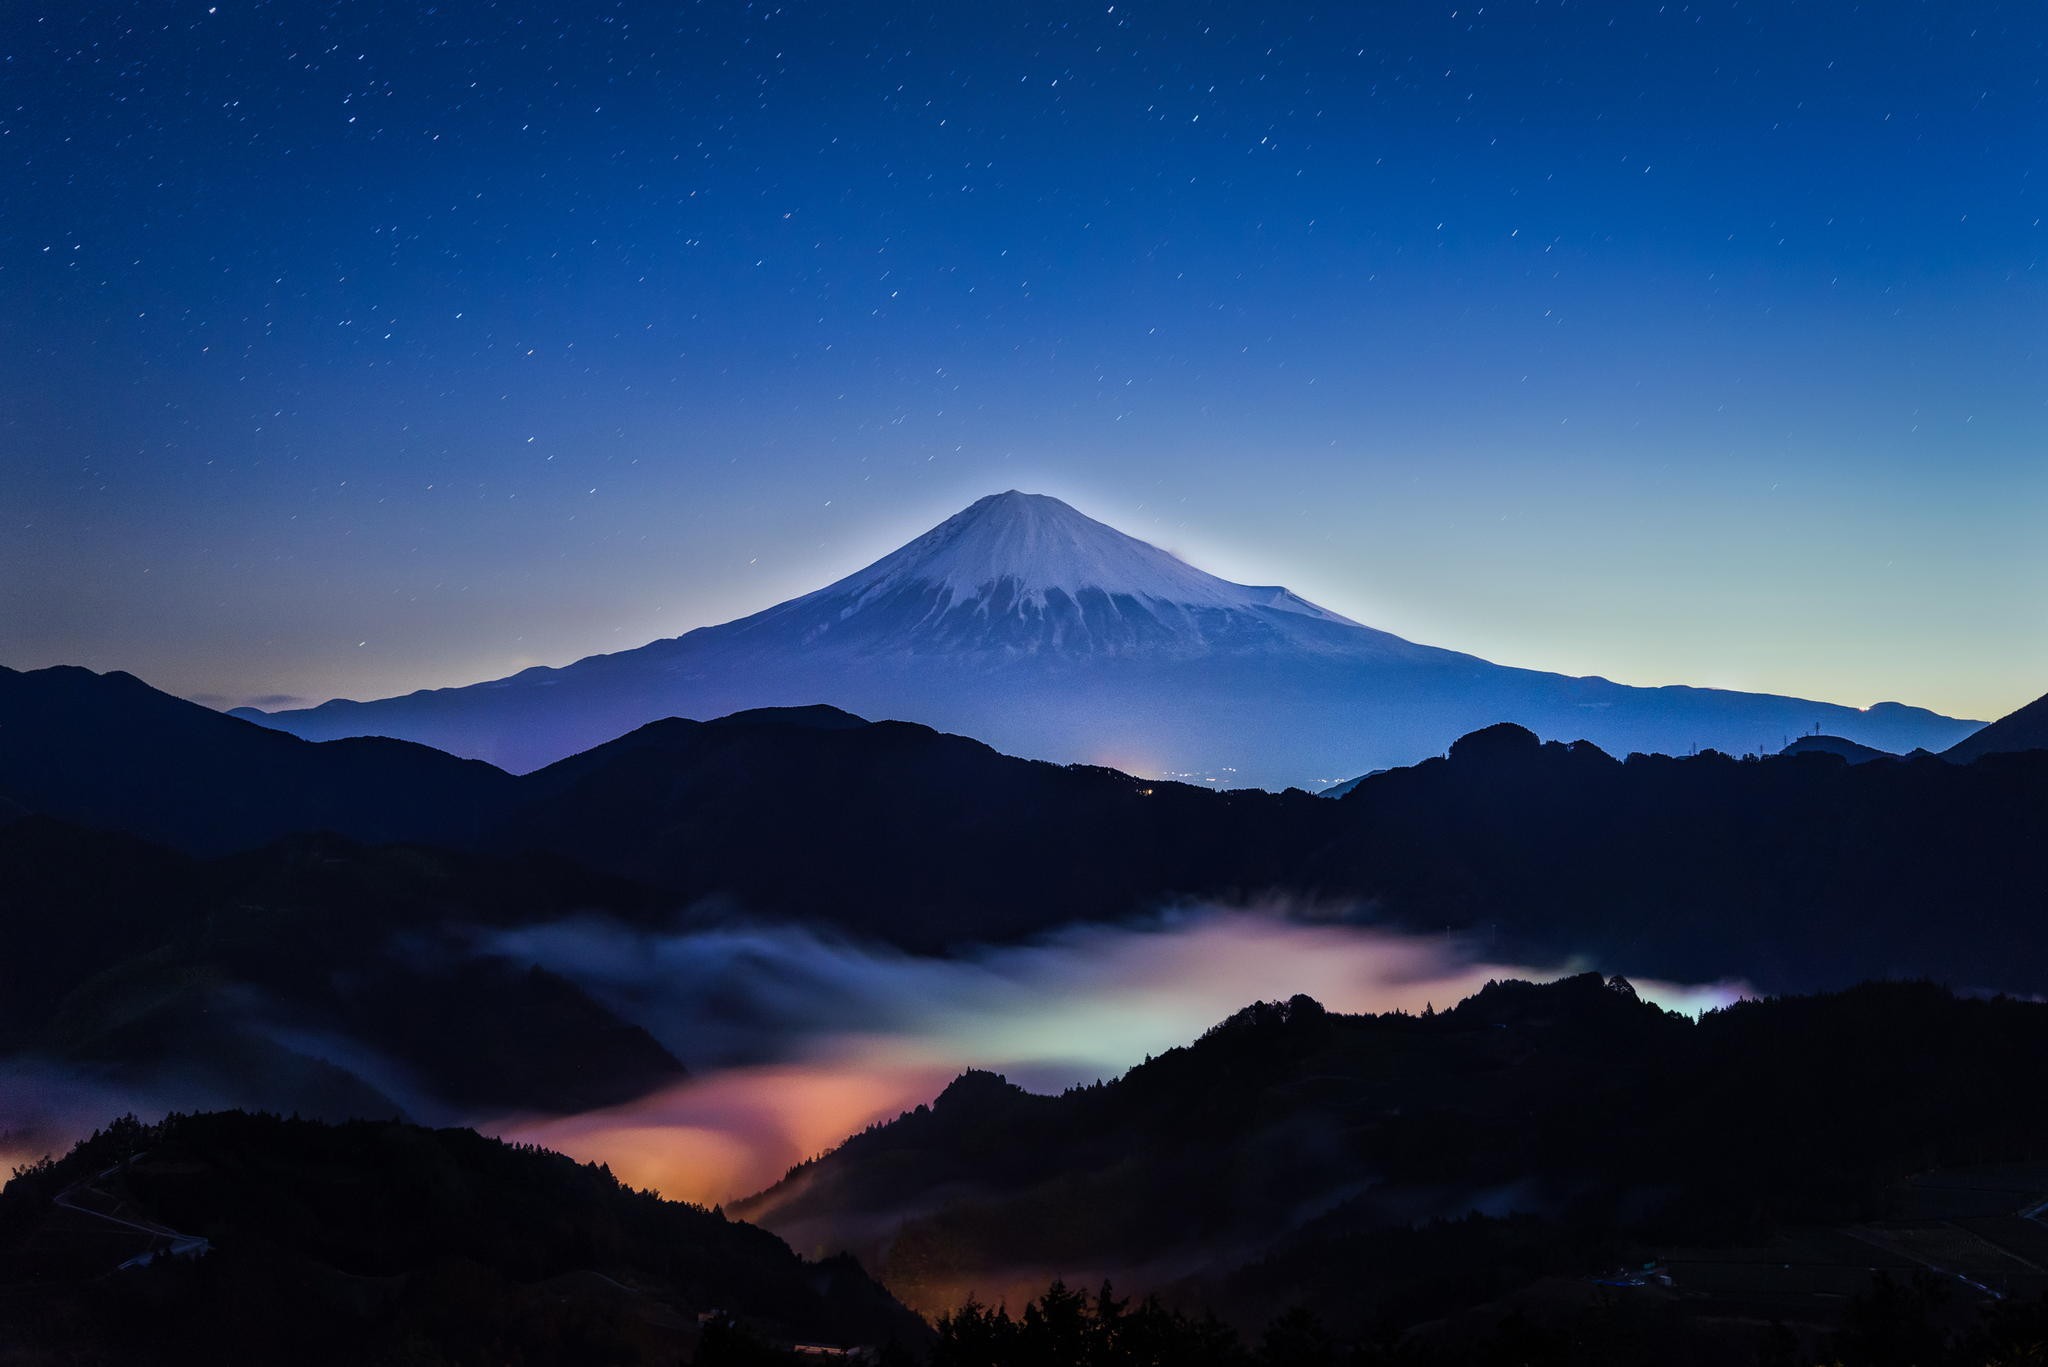 General 2048x1367 nature landscape Japan mountains Mount Fuji night blue Asia volcano